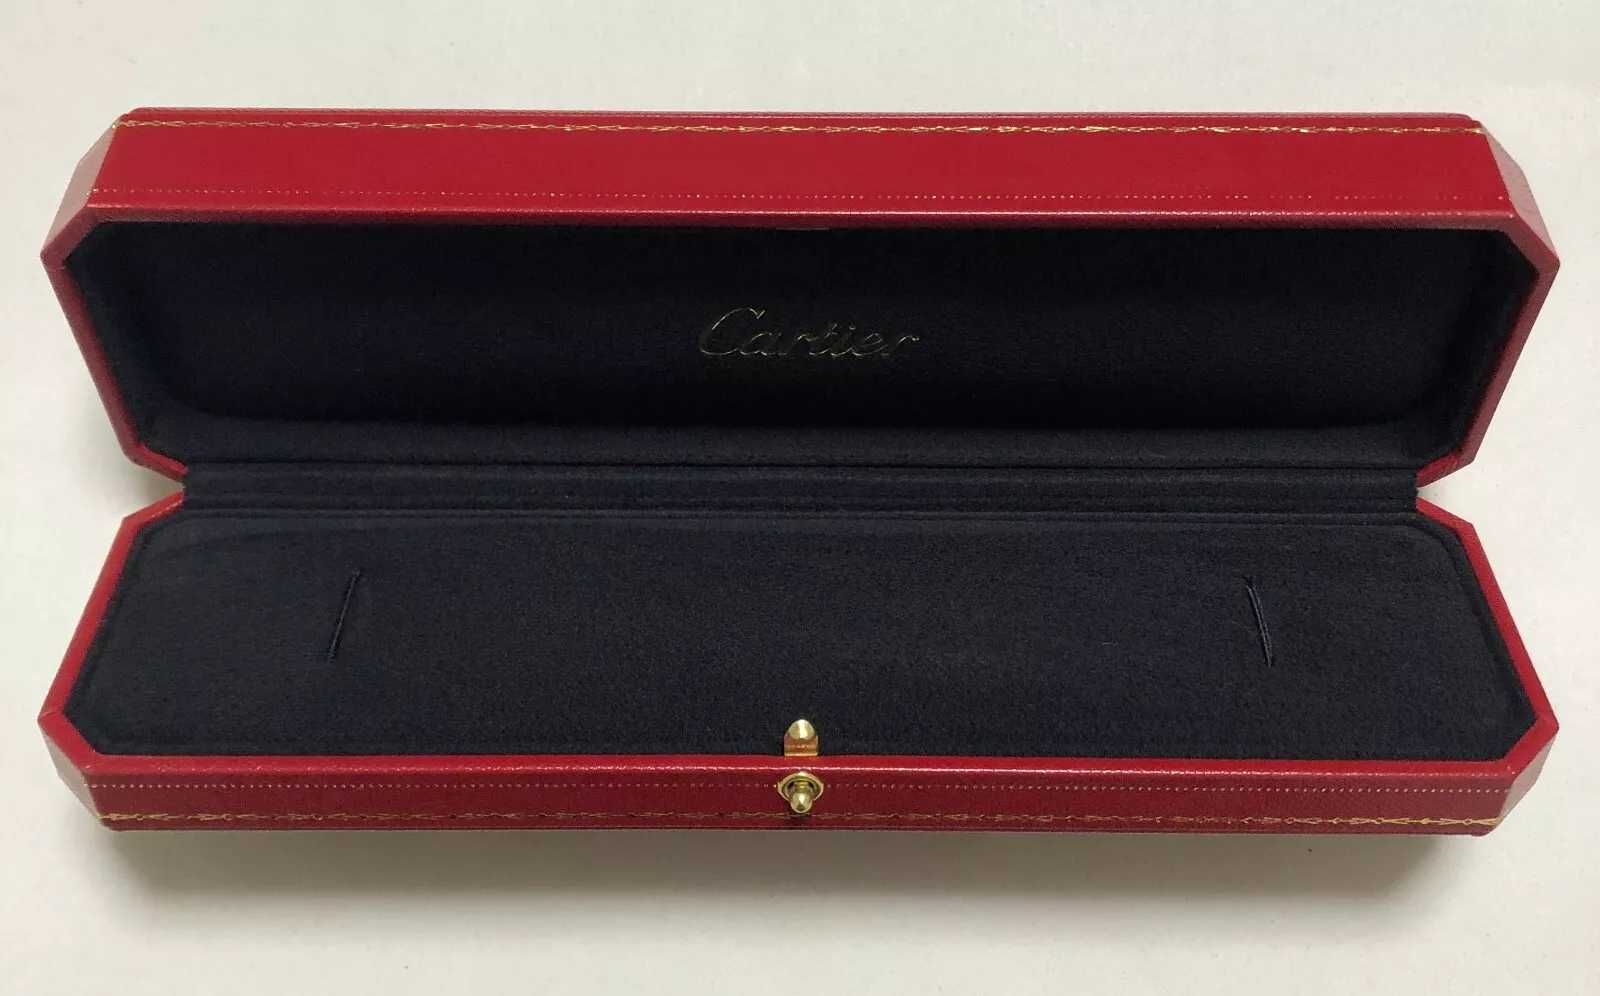 Cutie originala pre-owned Cartier pentru bratara sau lantisor